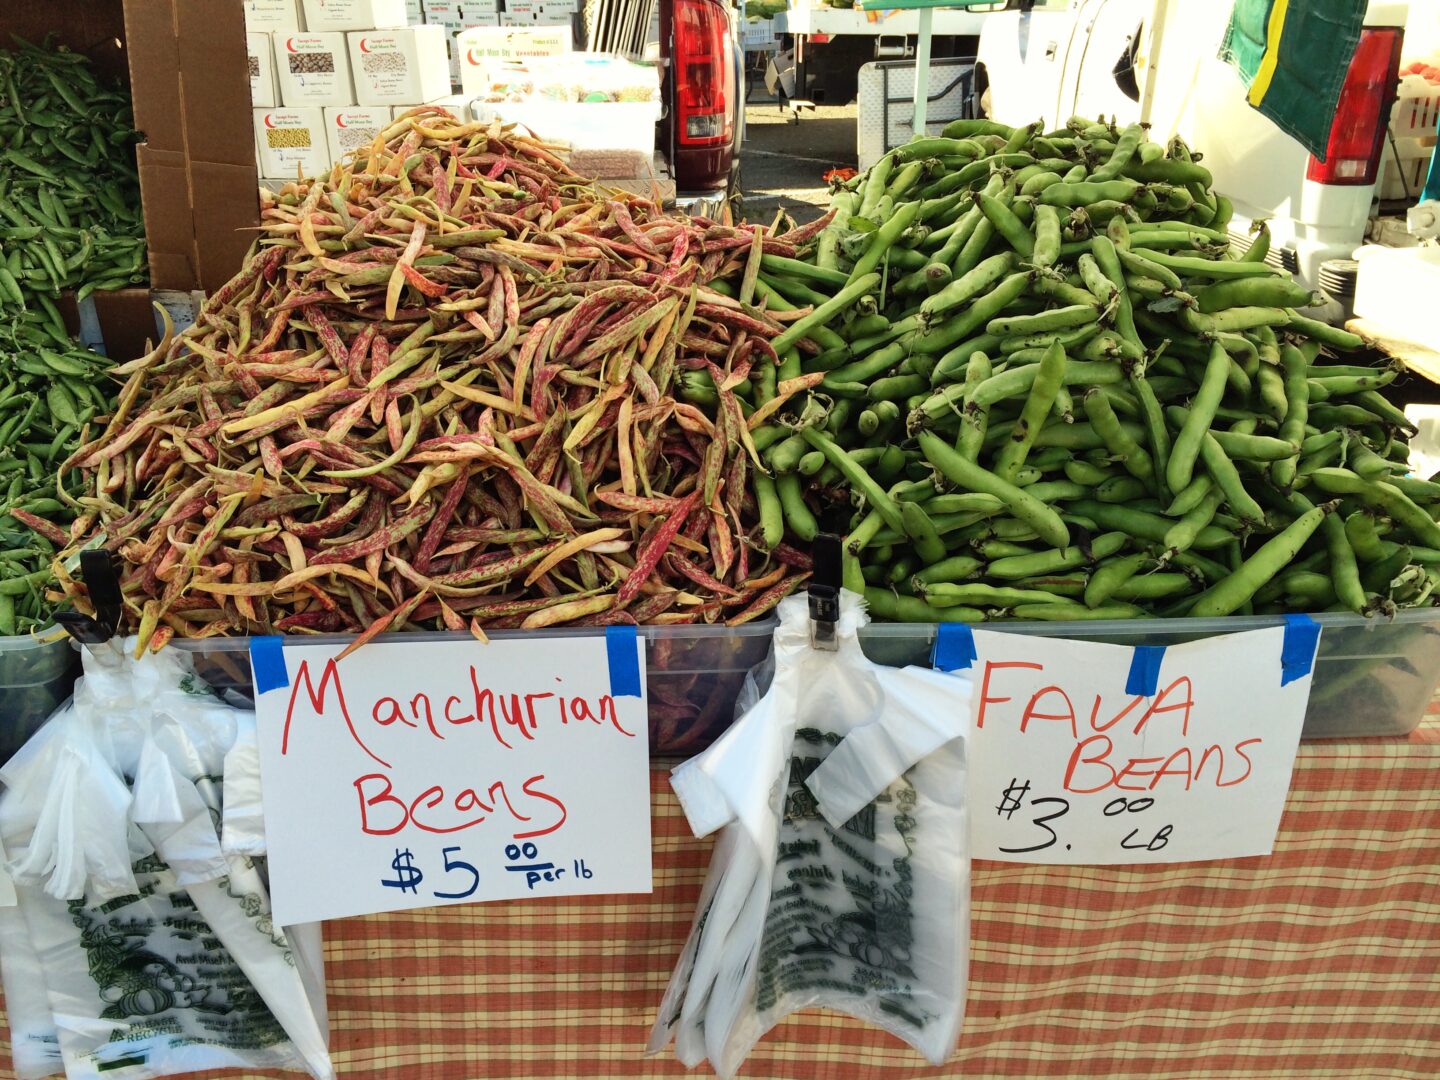 Manchurian Beans & Fava Beans